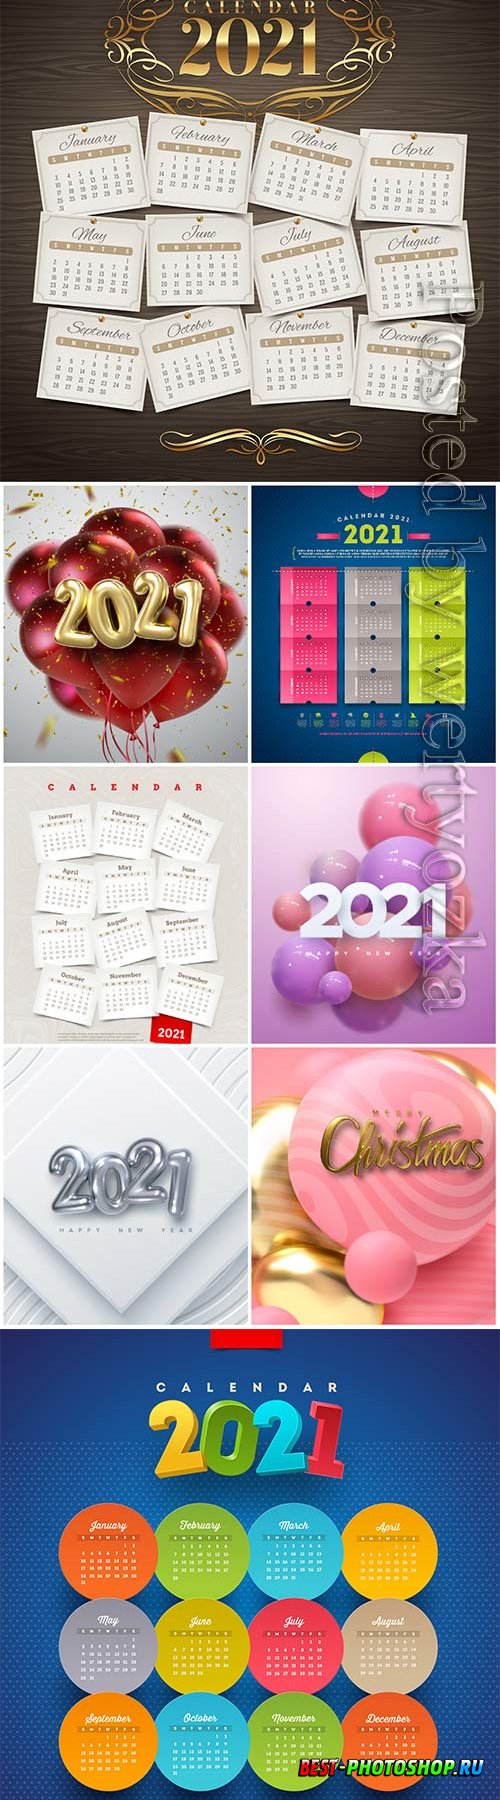 Desk calendar 2021 template design for new year vol 10